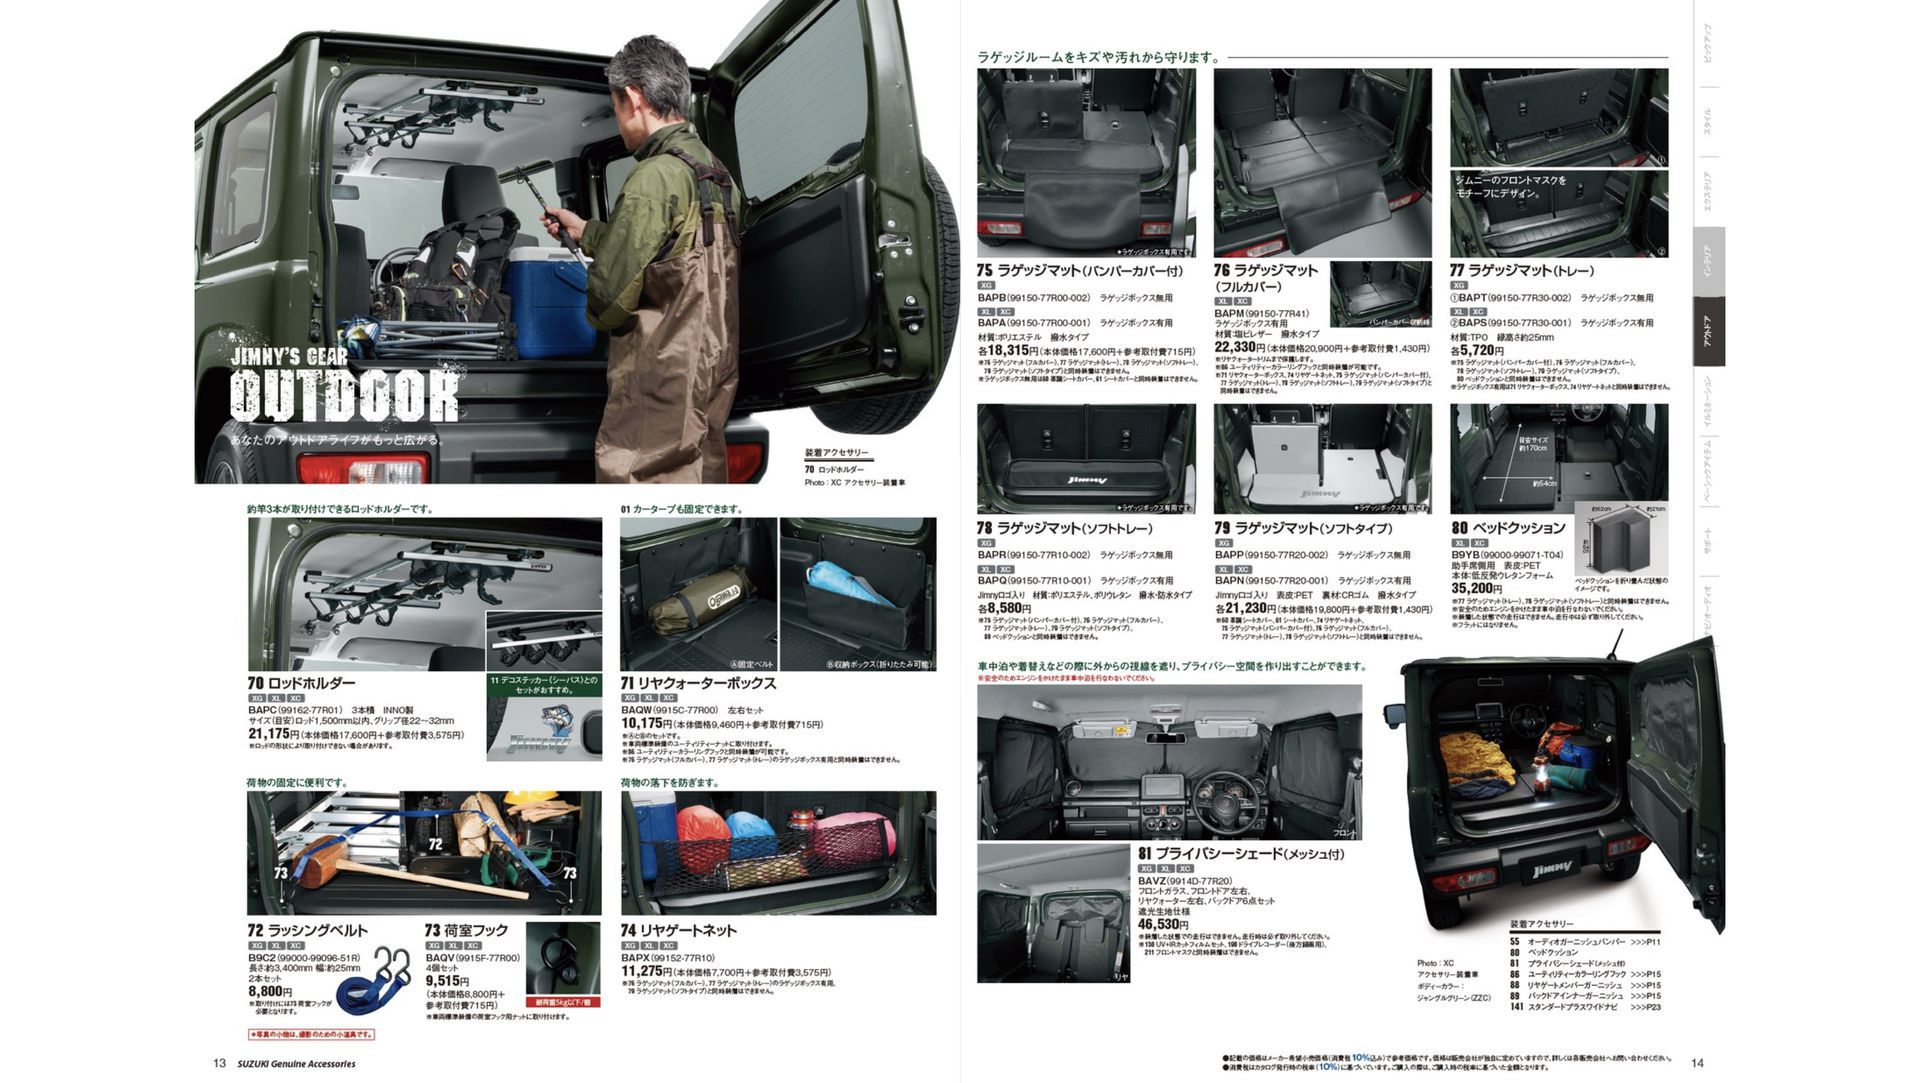 New Retro Graphics For The Suzuki Jimny 4x4 Auto Moto Japan Bullet